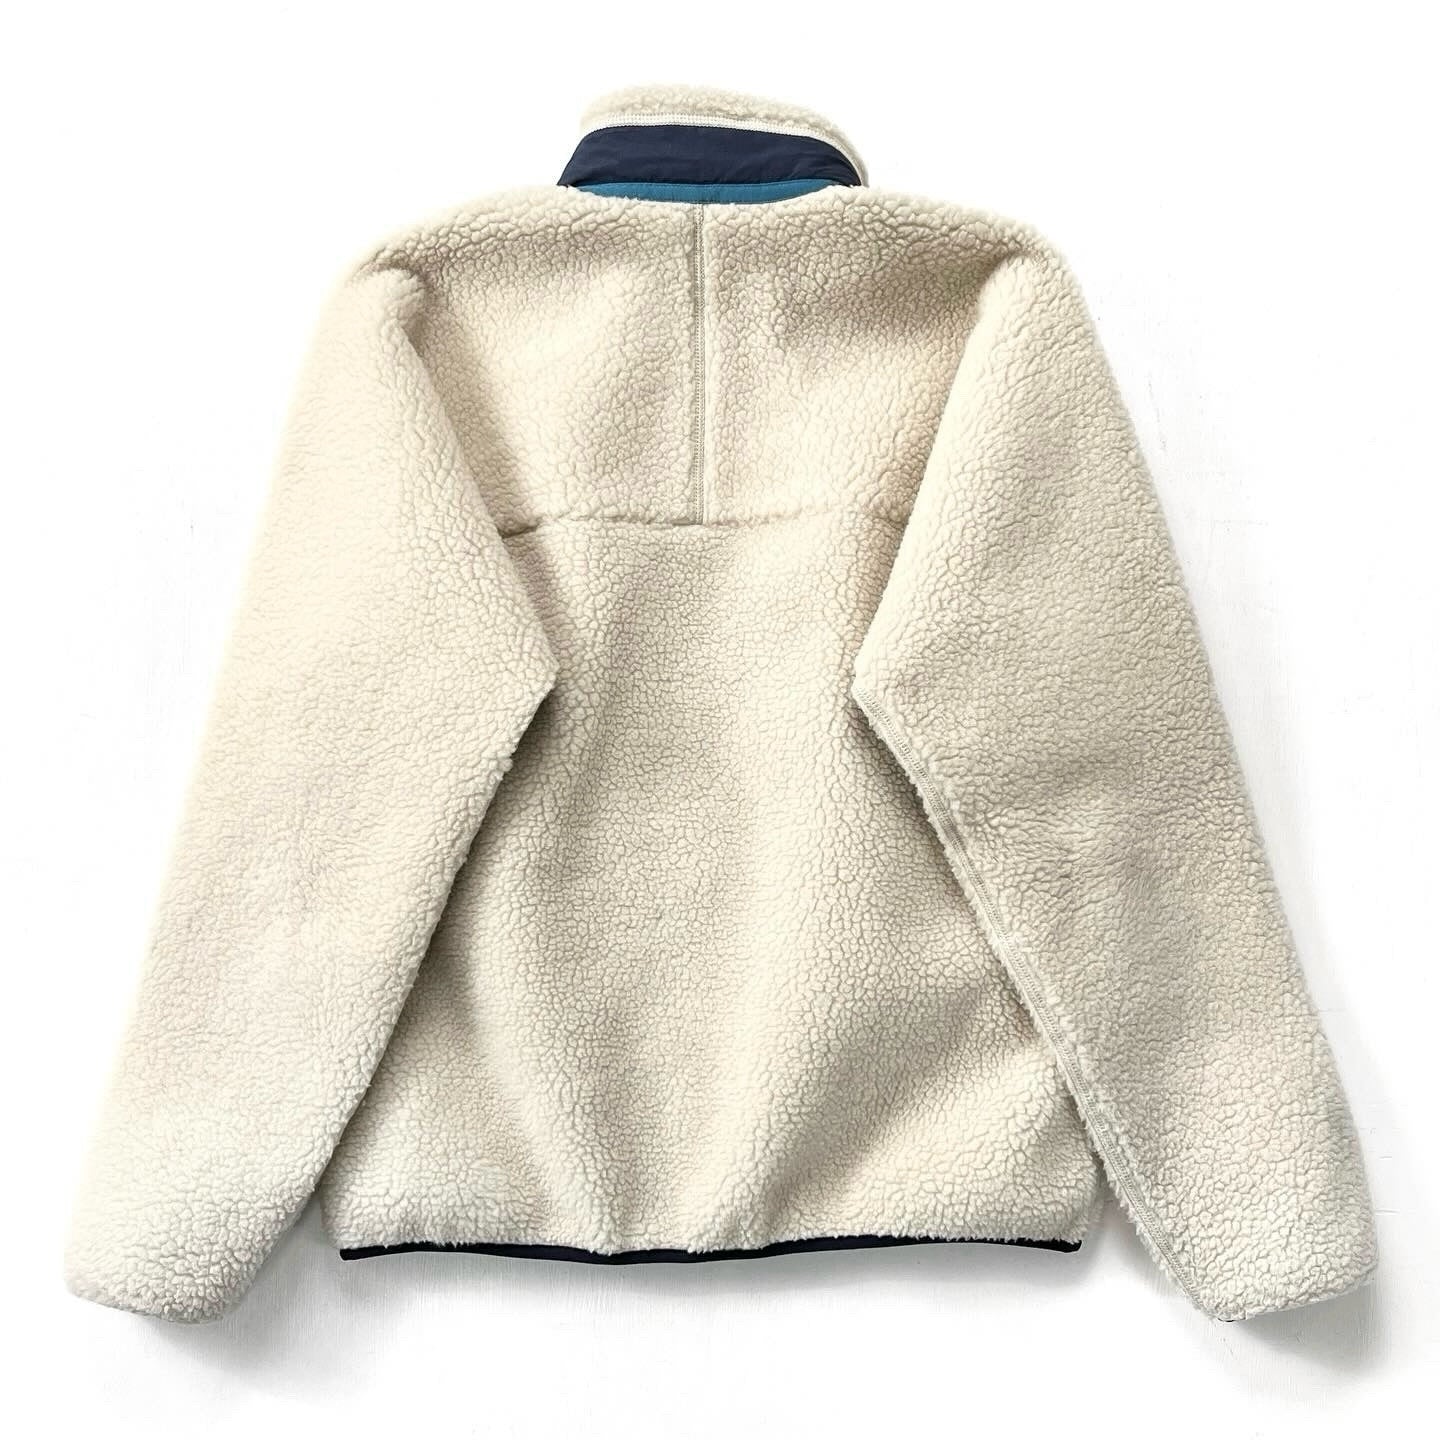 2015 Patagonia Retro-X Fleece Jacket, Natural & Classic Navy (S)